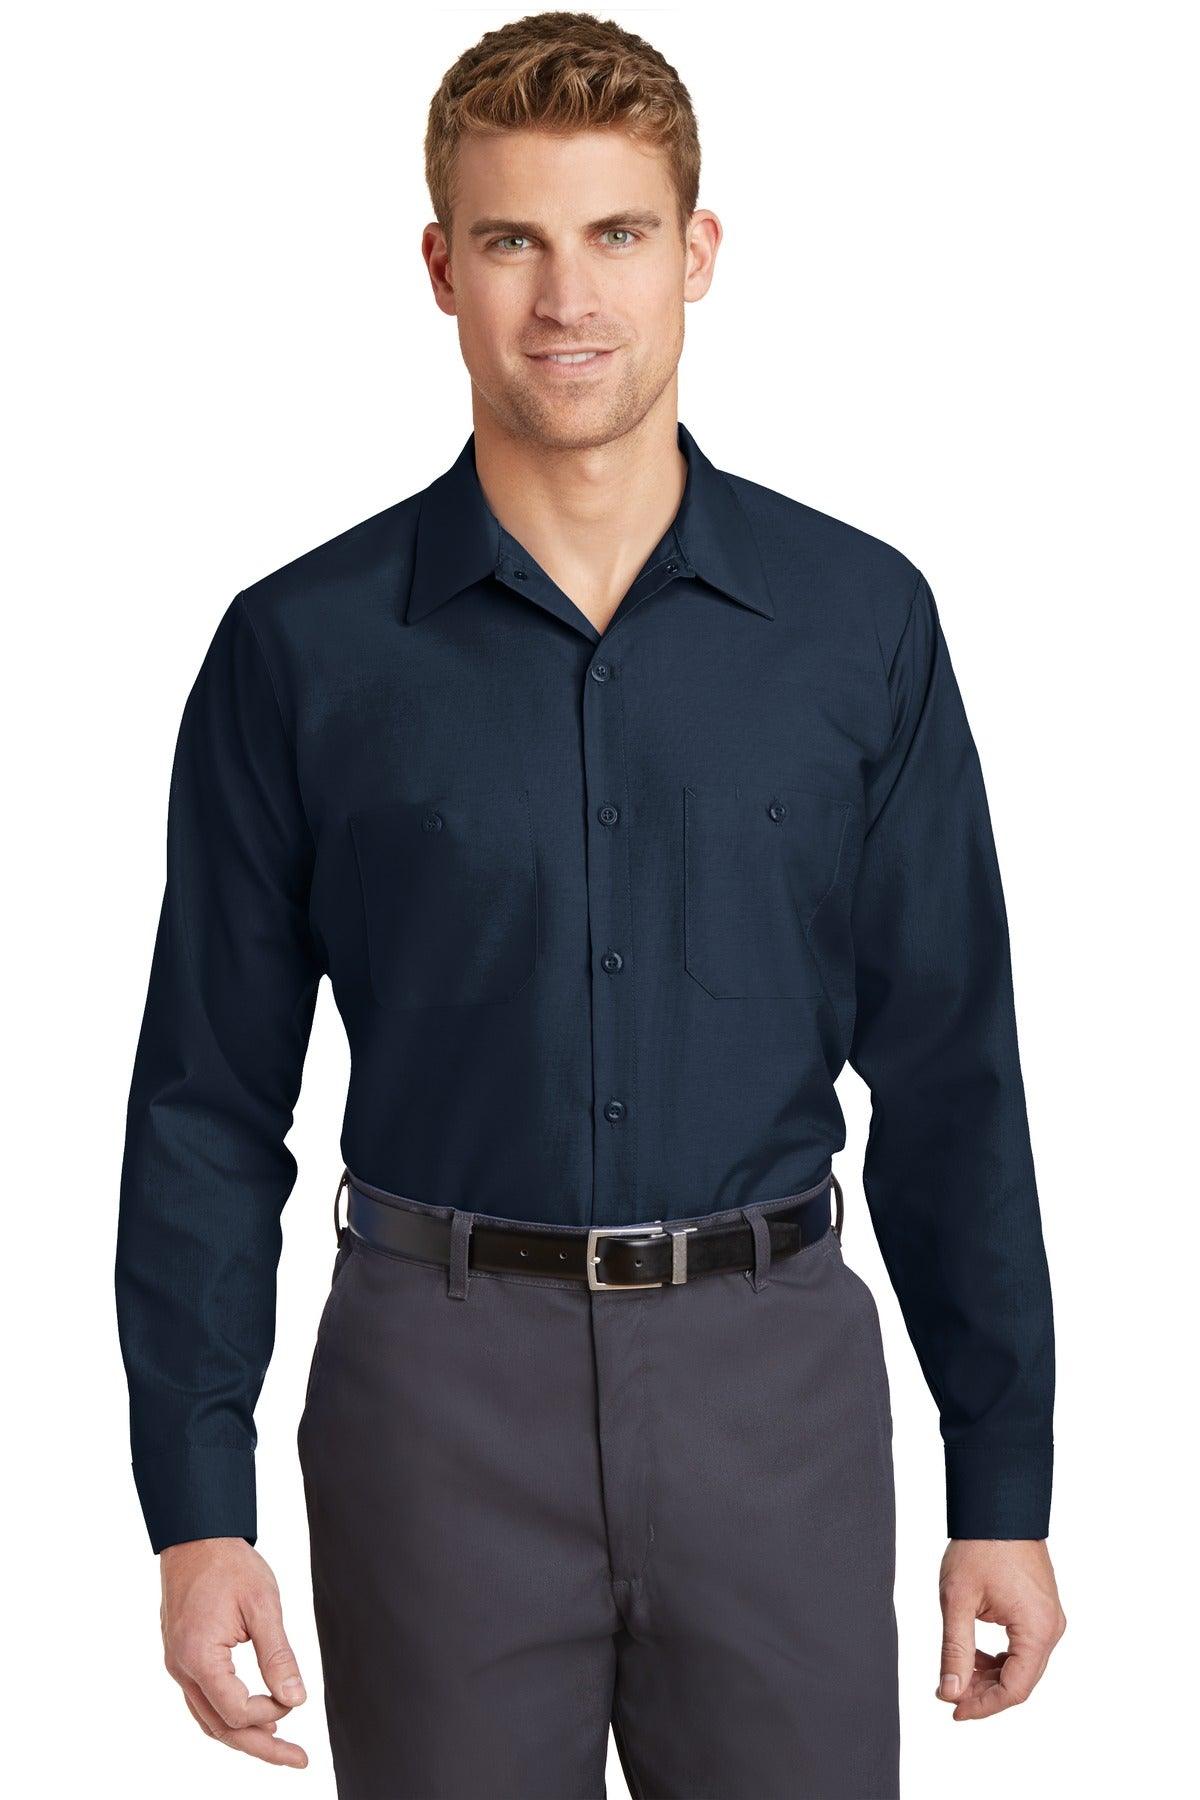 Red Kap Long Sleeve Industrial Work Shirt. SP14 - Dresses Max